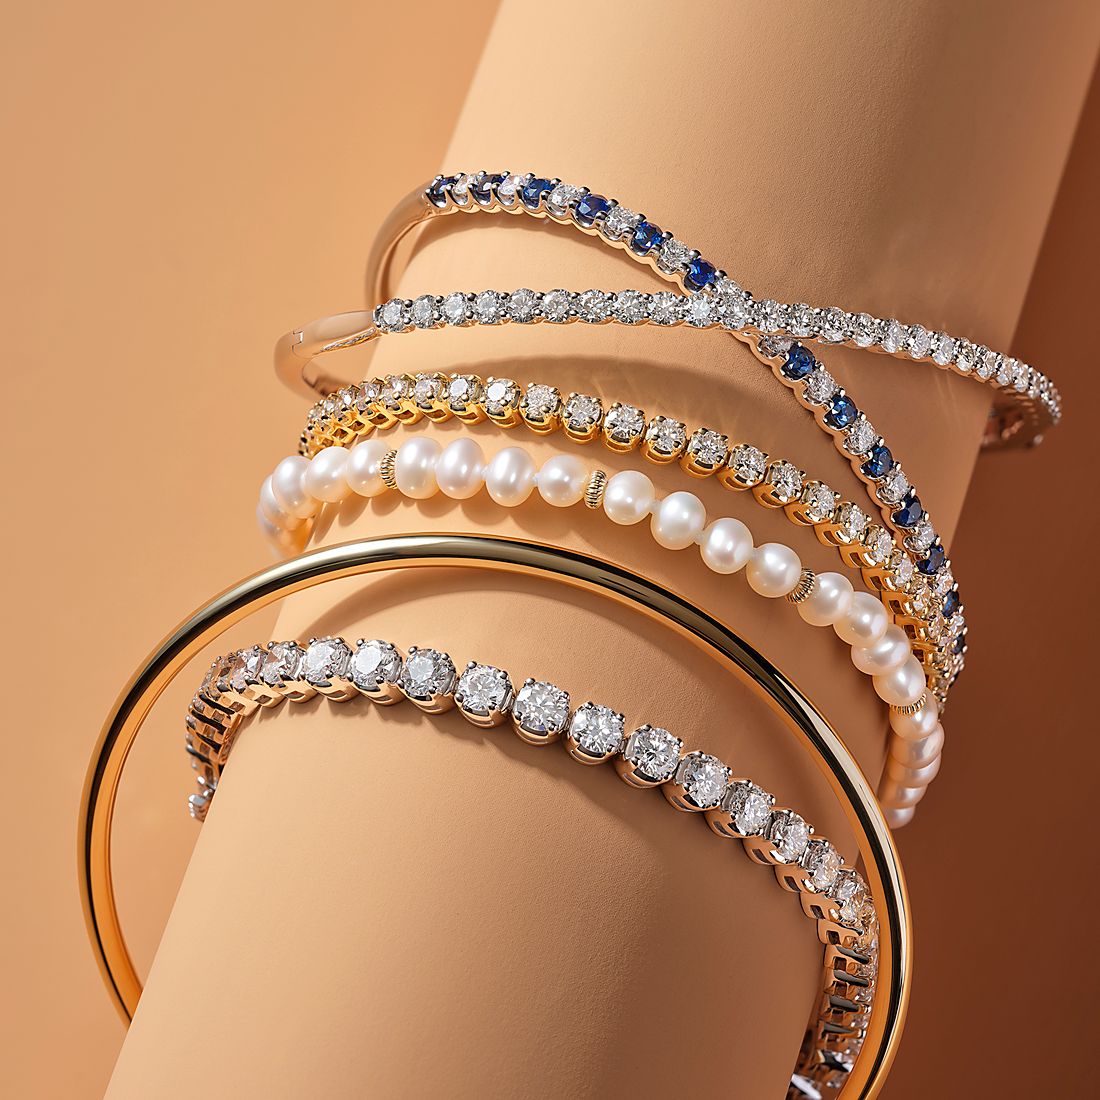 Six bracelets on a jewelry display including diamond, gemstone and gold bracelets 